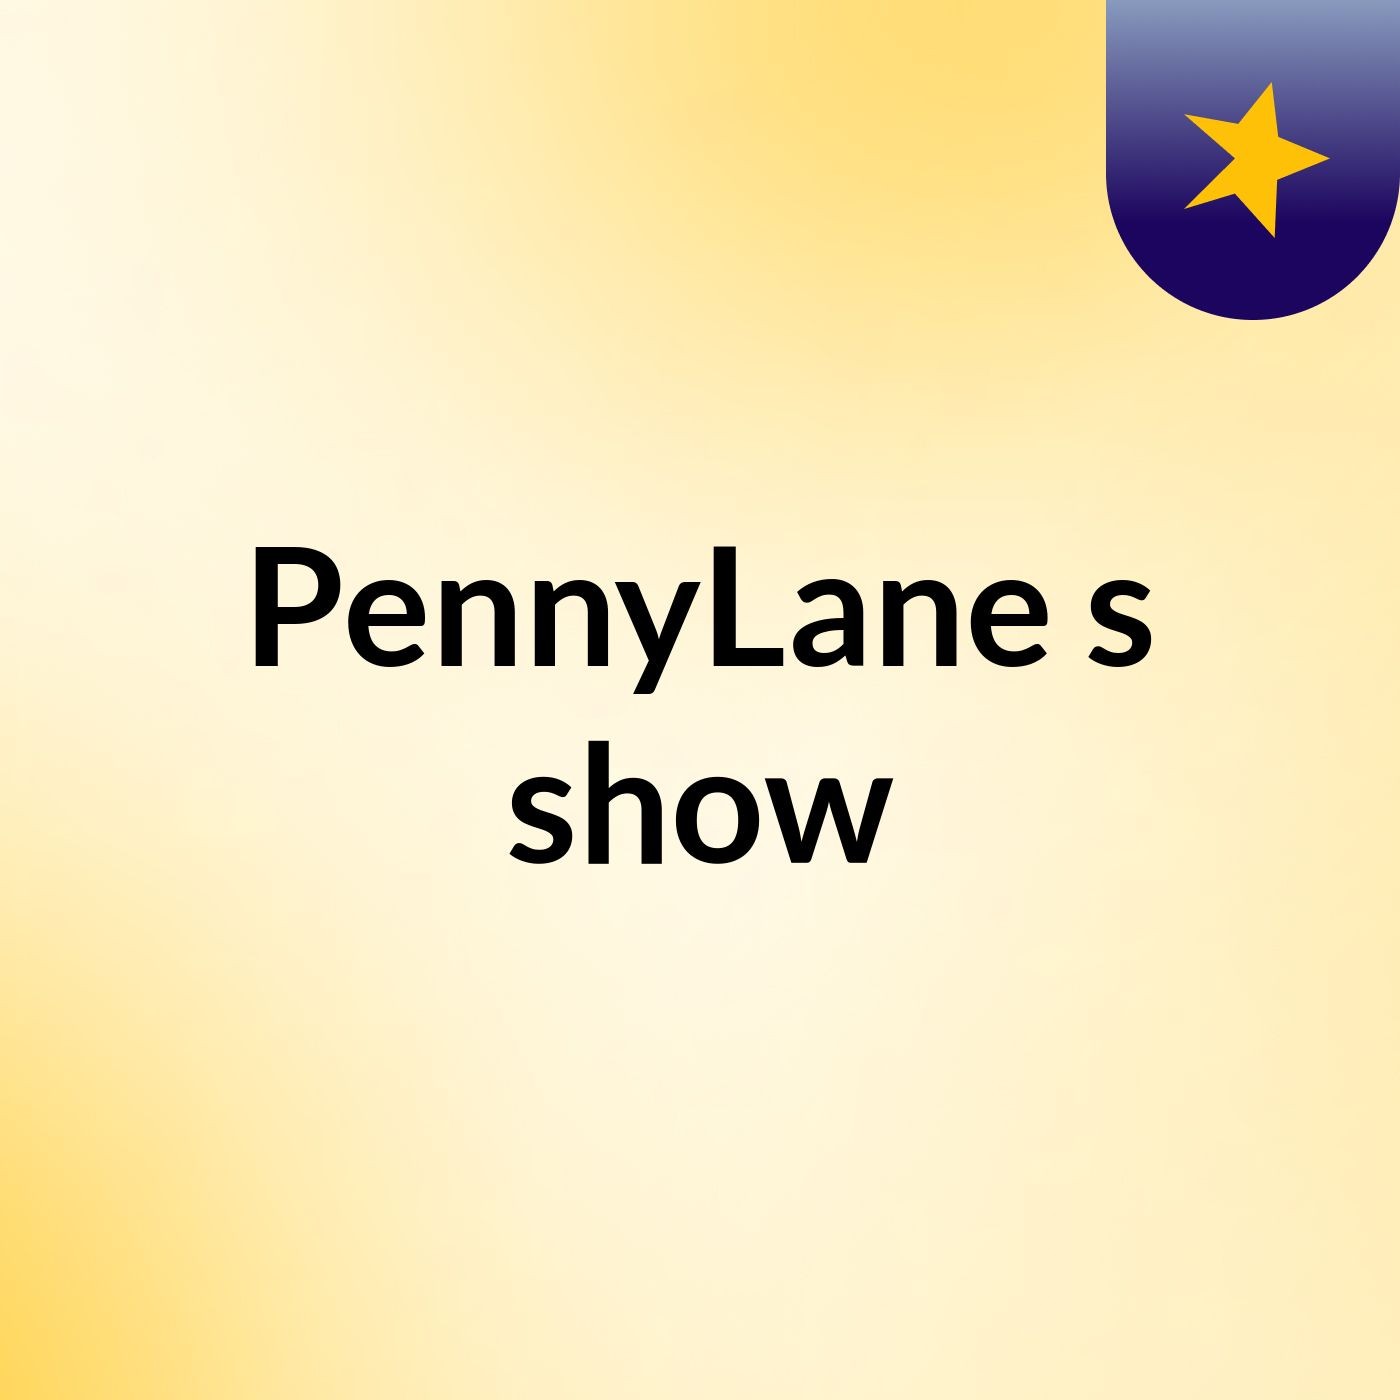 PennyLane's show